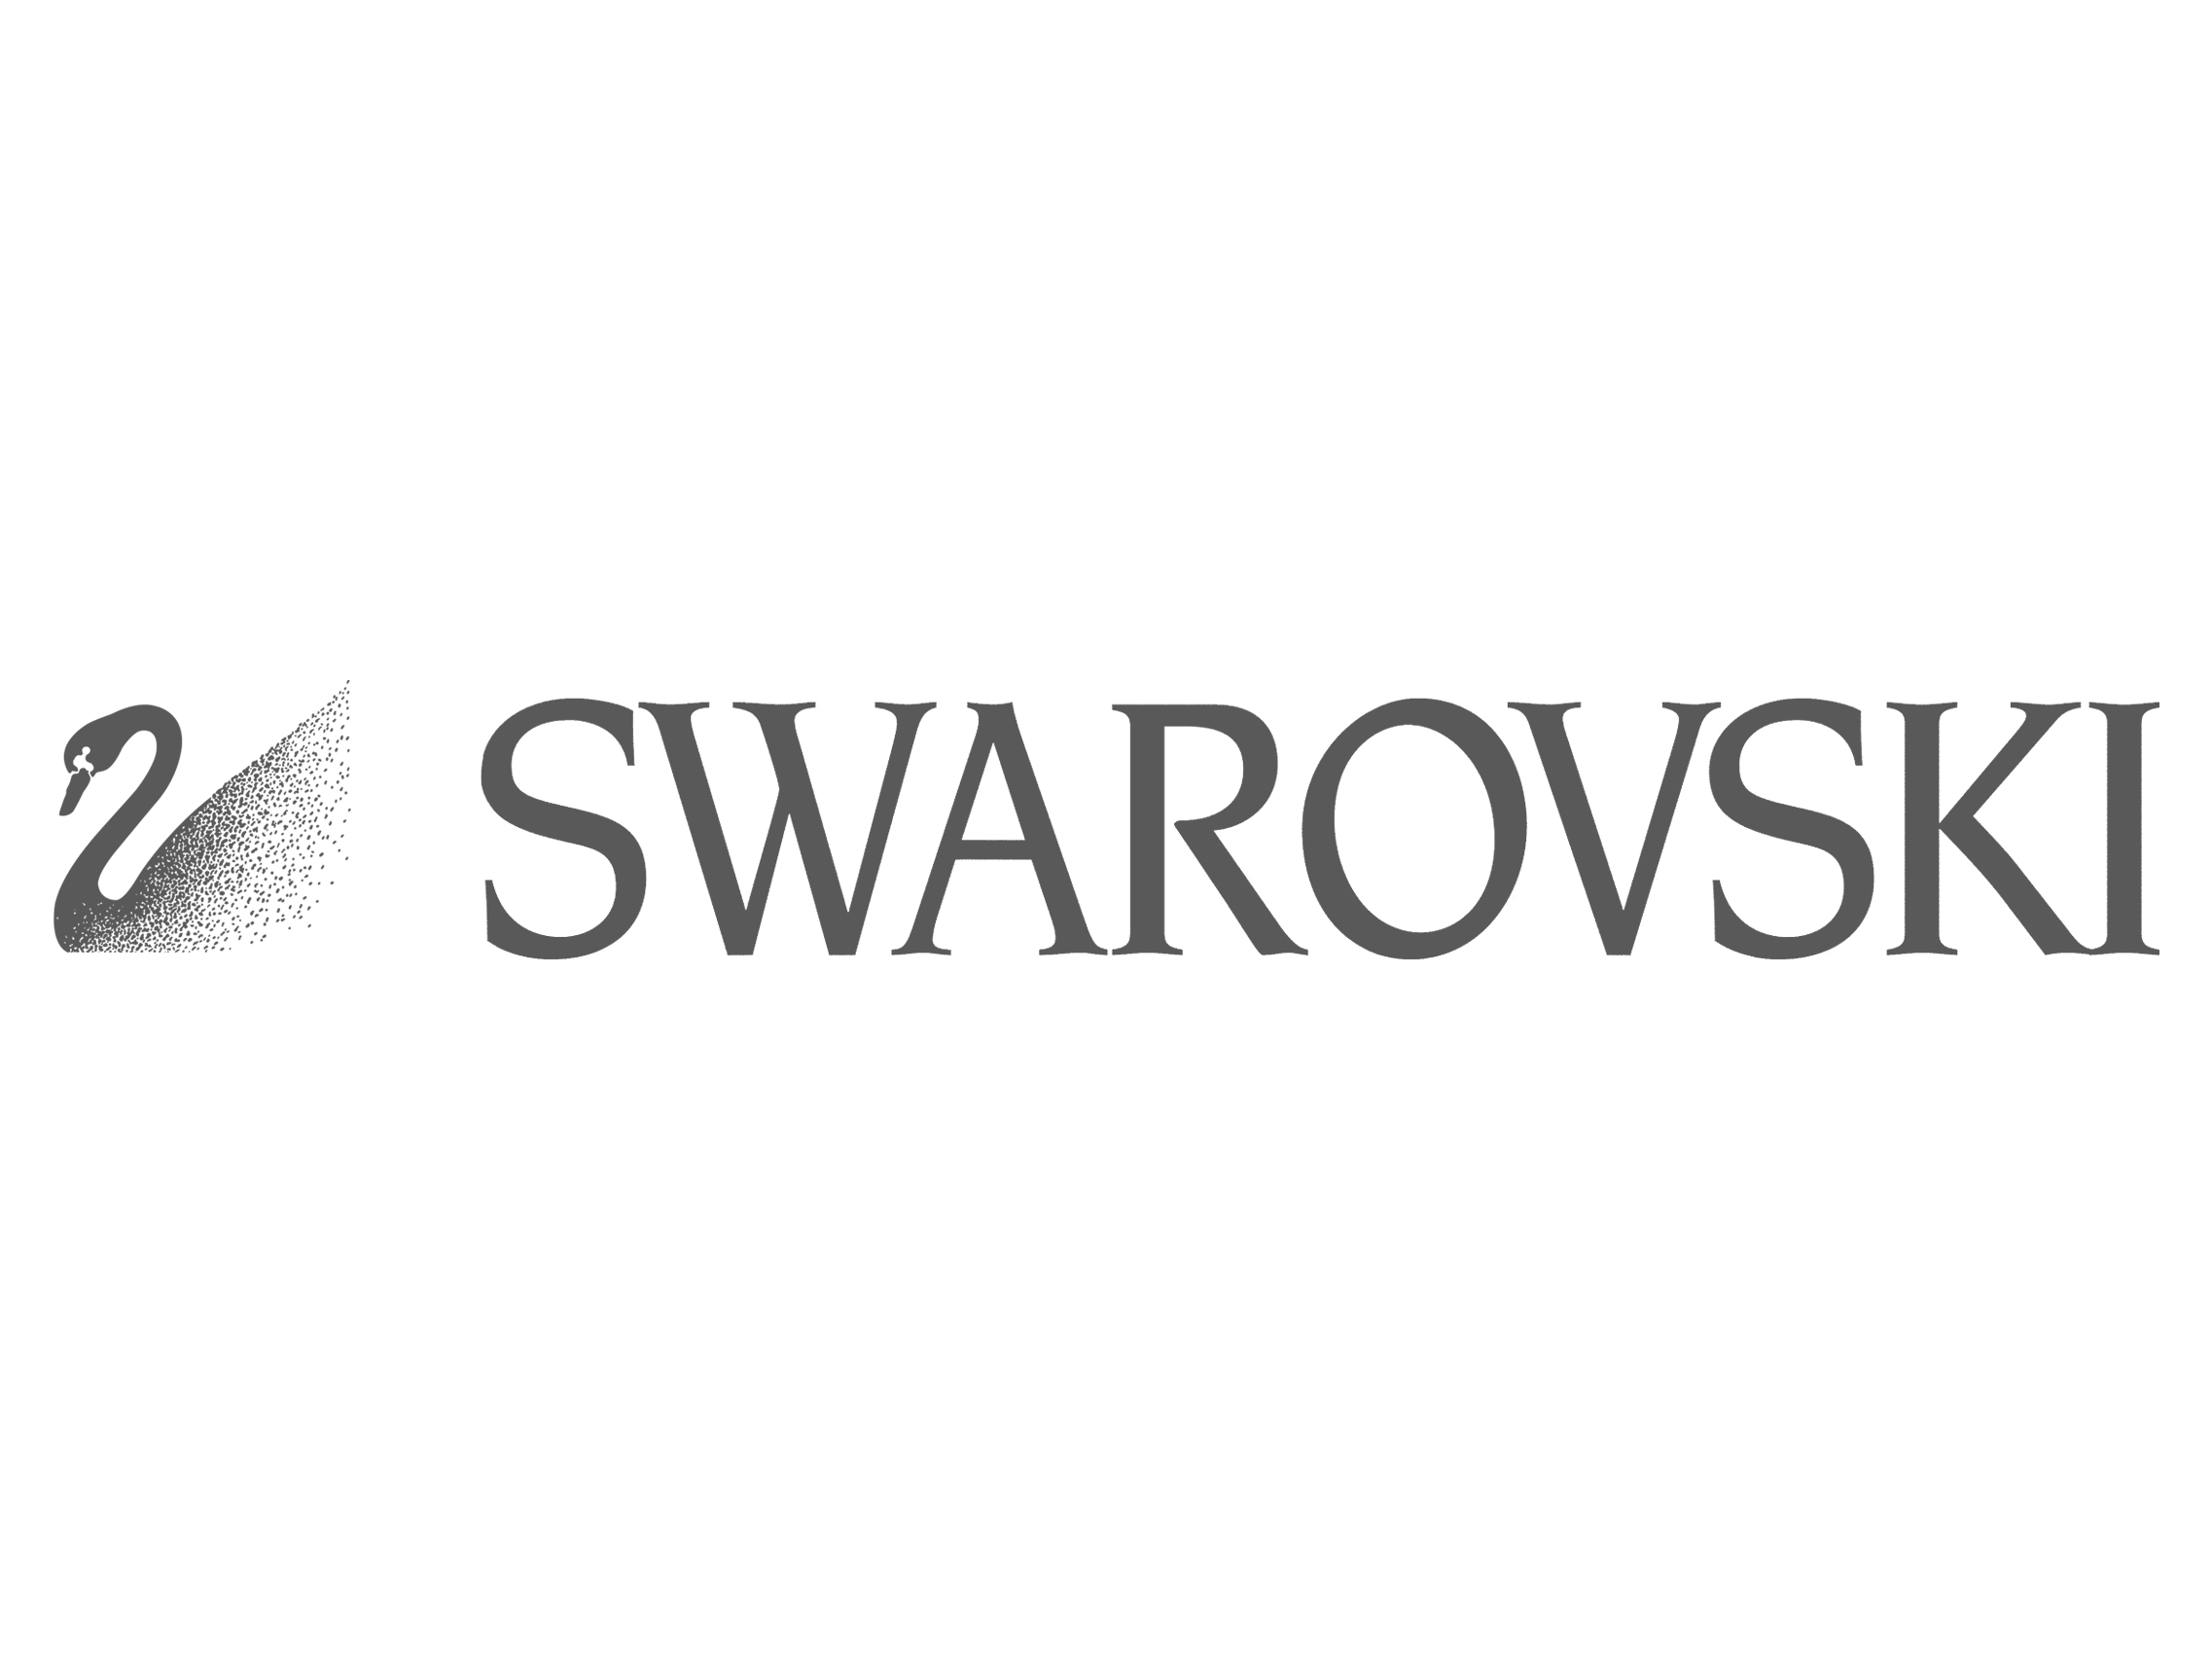 Swarovski Logo - Swarovski logo and wordmarl - Logok